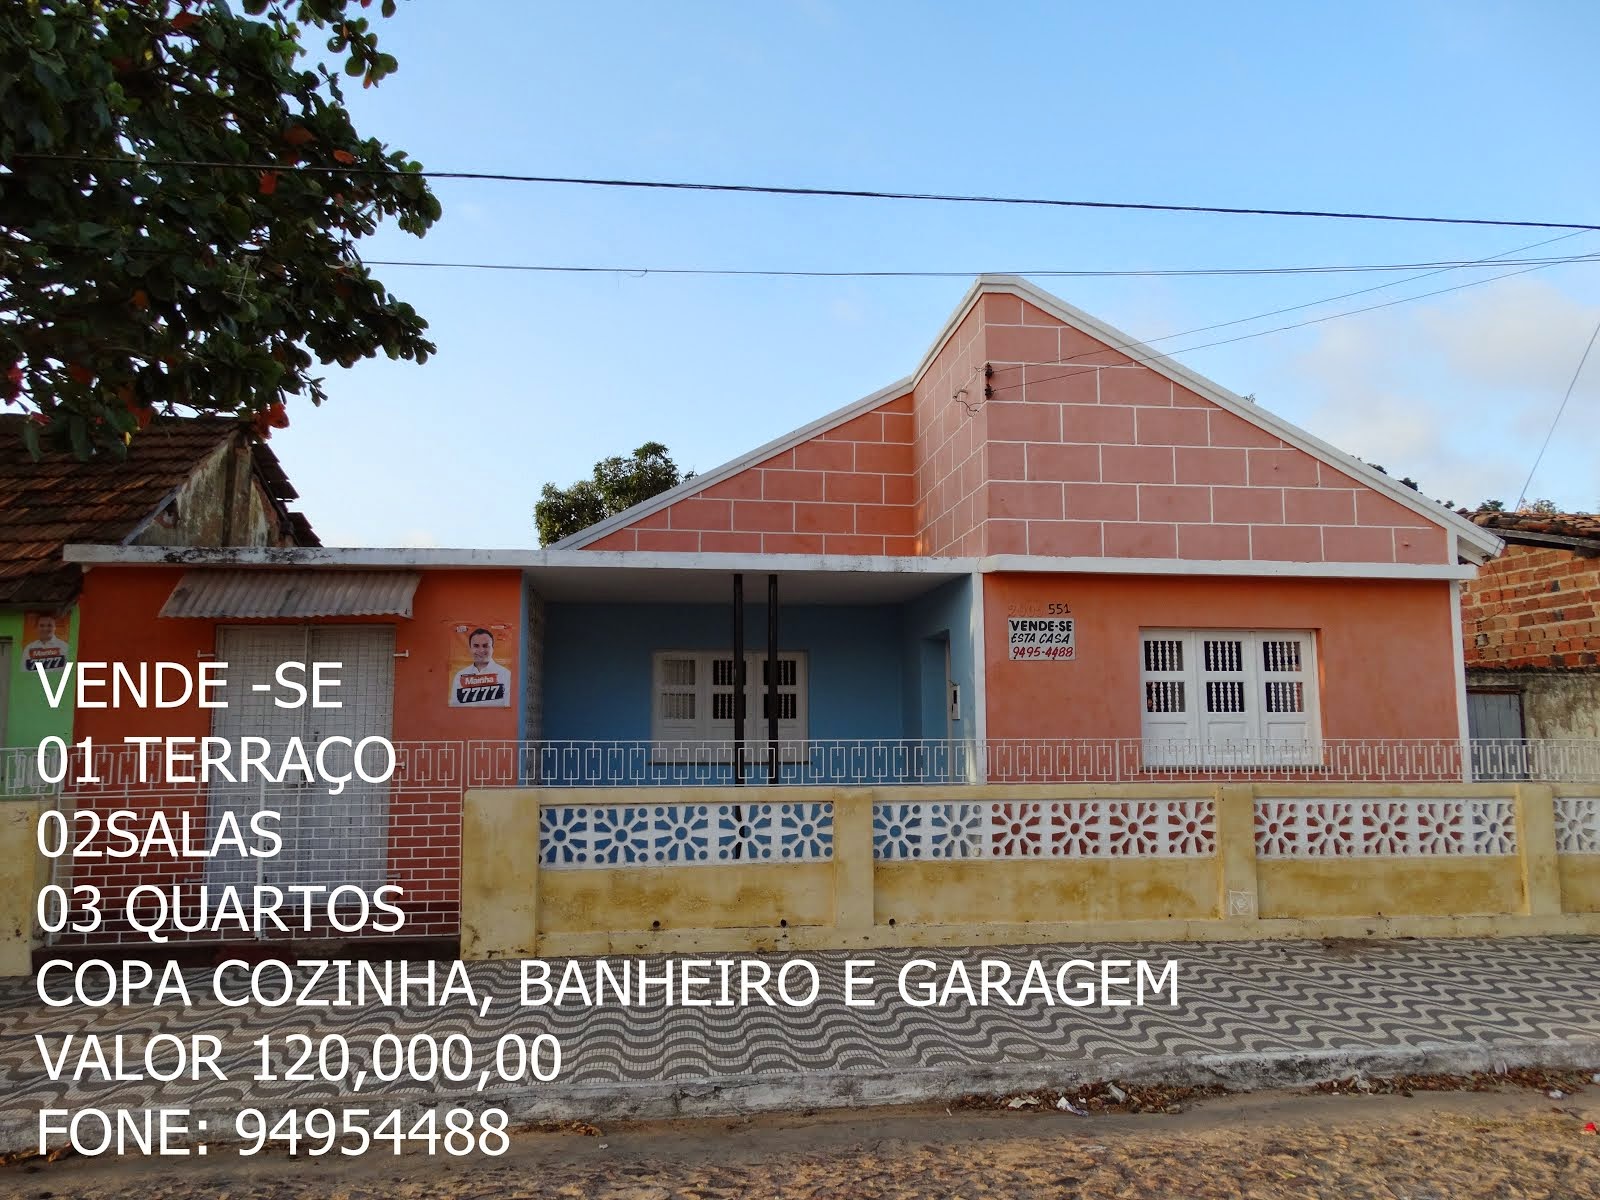 VENDE -SE ESTA CASA na Guaporé,551 Bairro são Francisco Parnaíba Piauí FONE 94954488